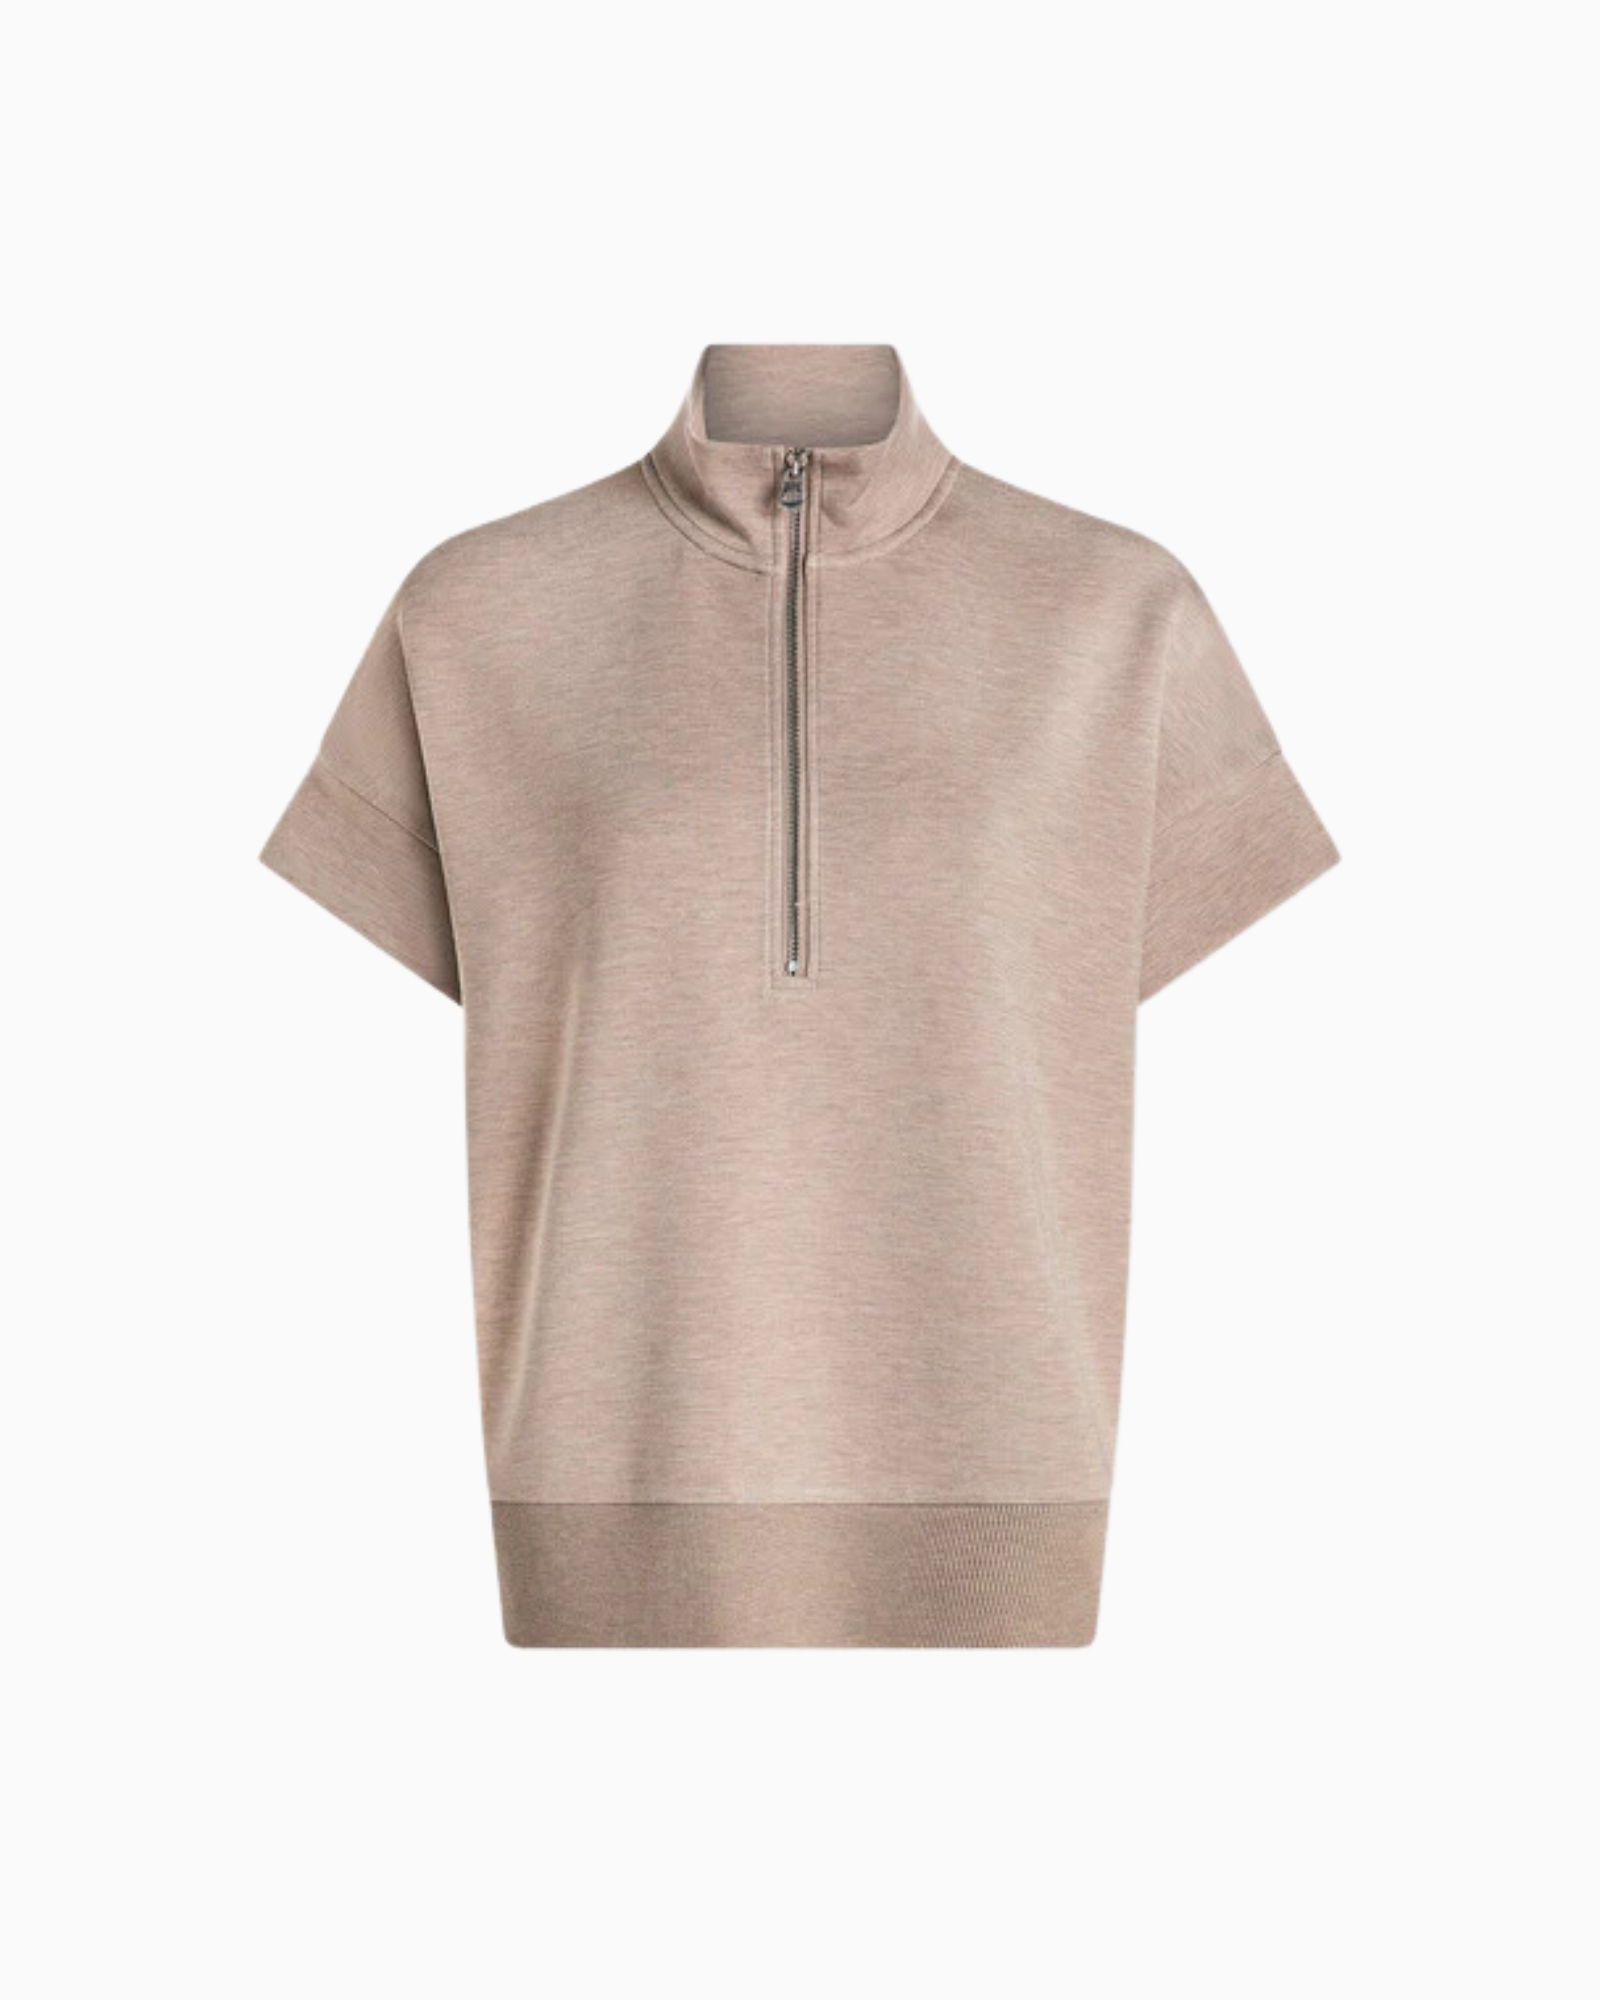 Varley Ritchie Short Sleeve Sweatshirt in Taupe Marl